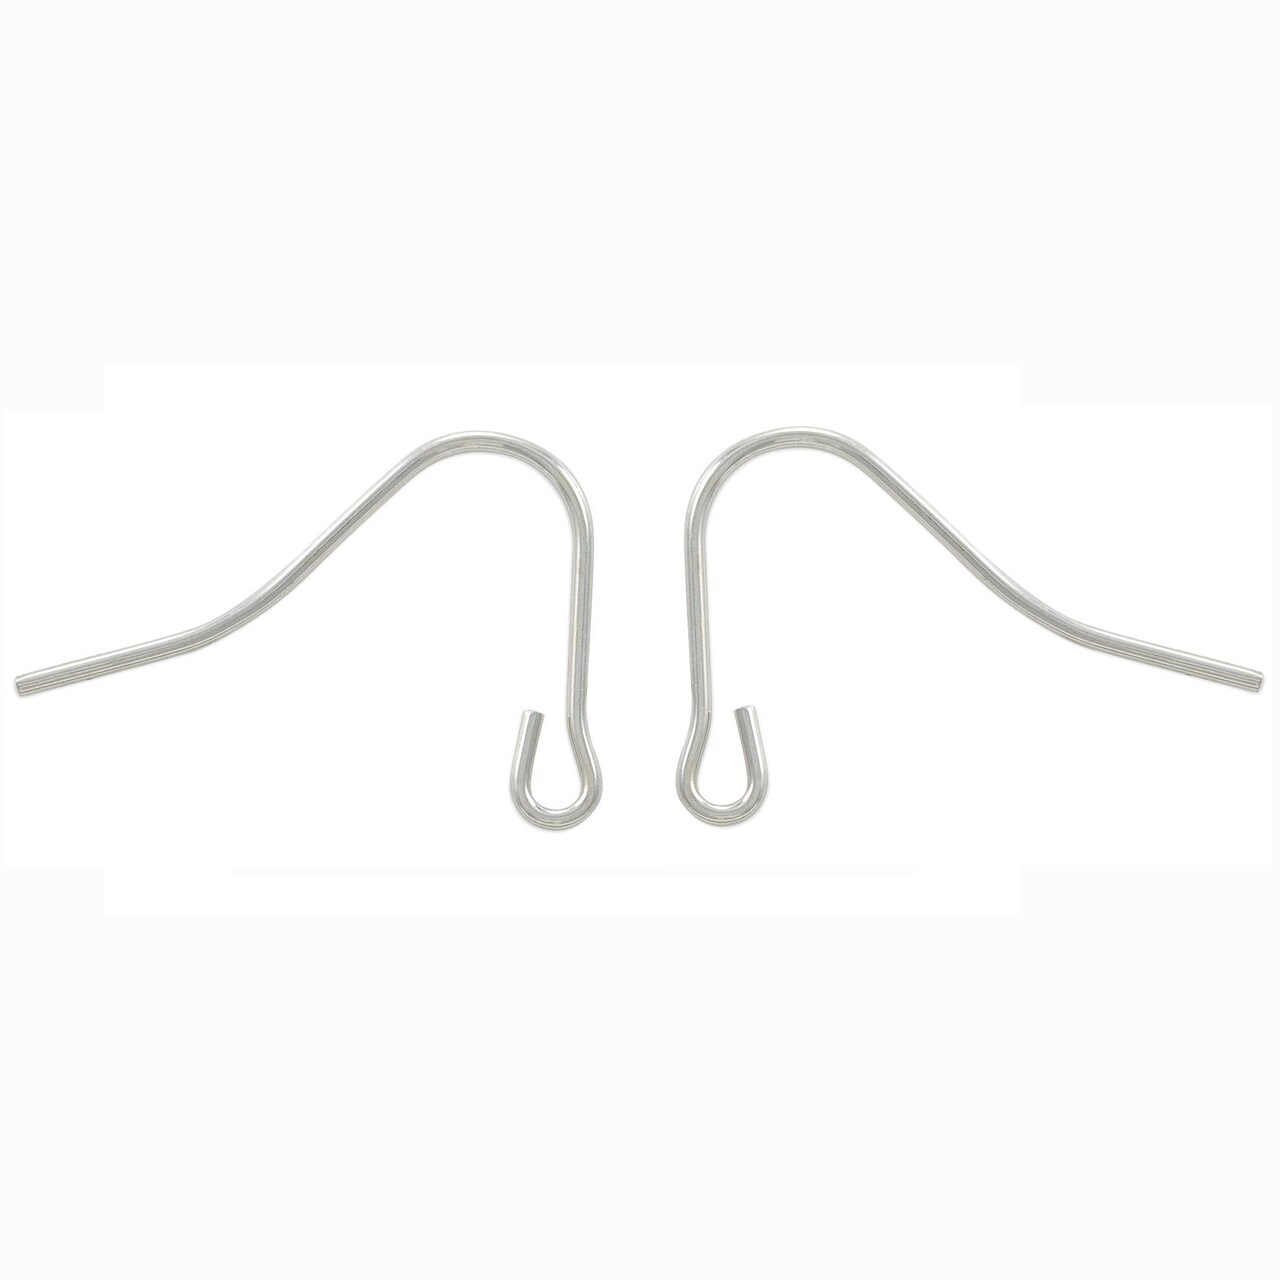 JewelrySupply Sterling Silver Fish Hook Earring Wires (1 Pair of Sterling  Silver Earrings)